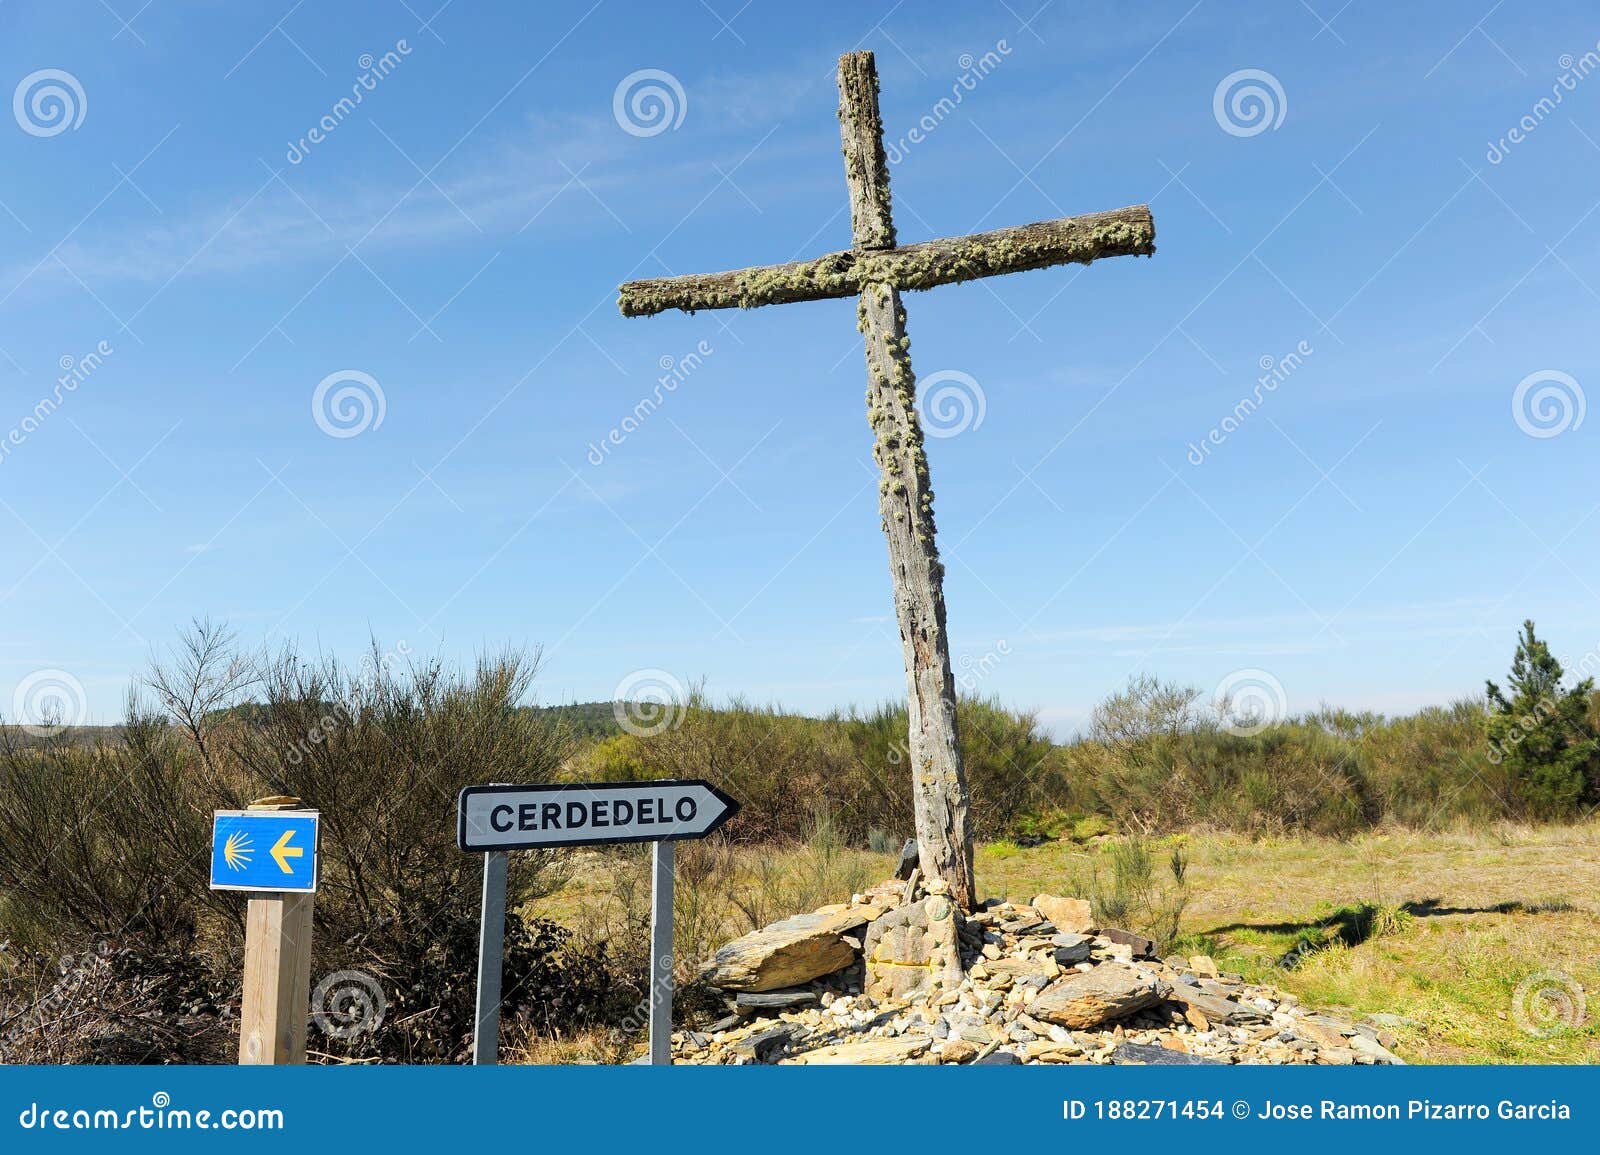 wooden cross on the camino de santiago near cerdedelos, galicia, spain